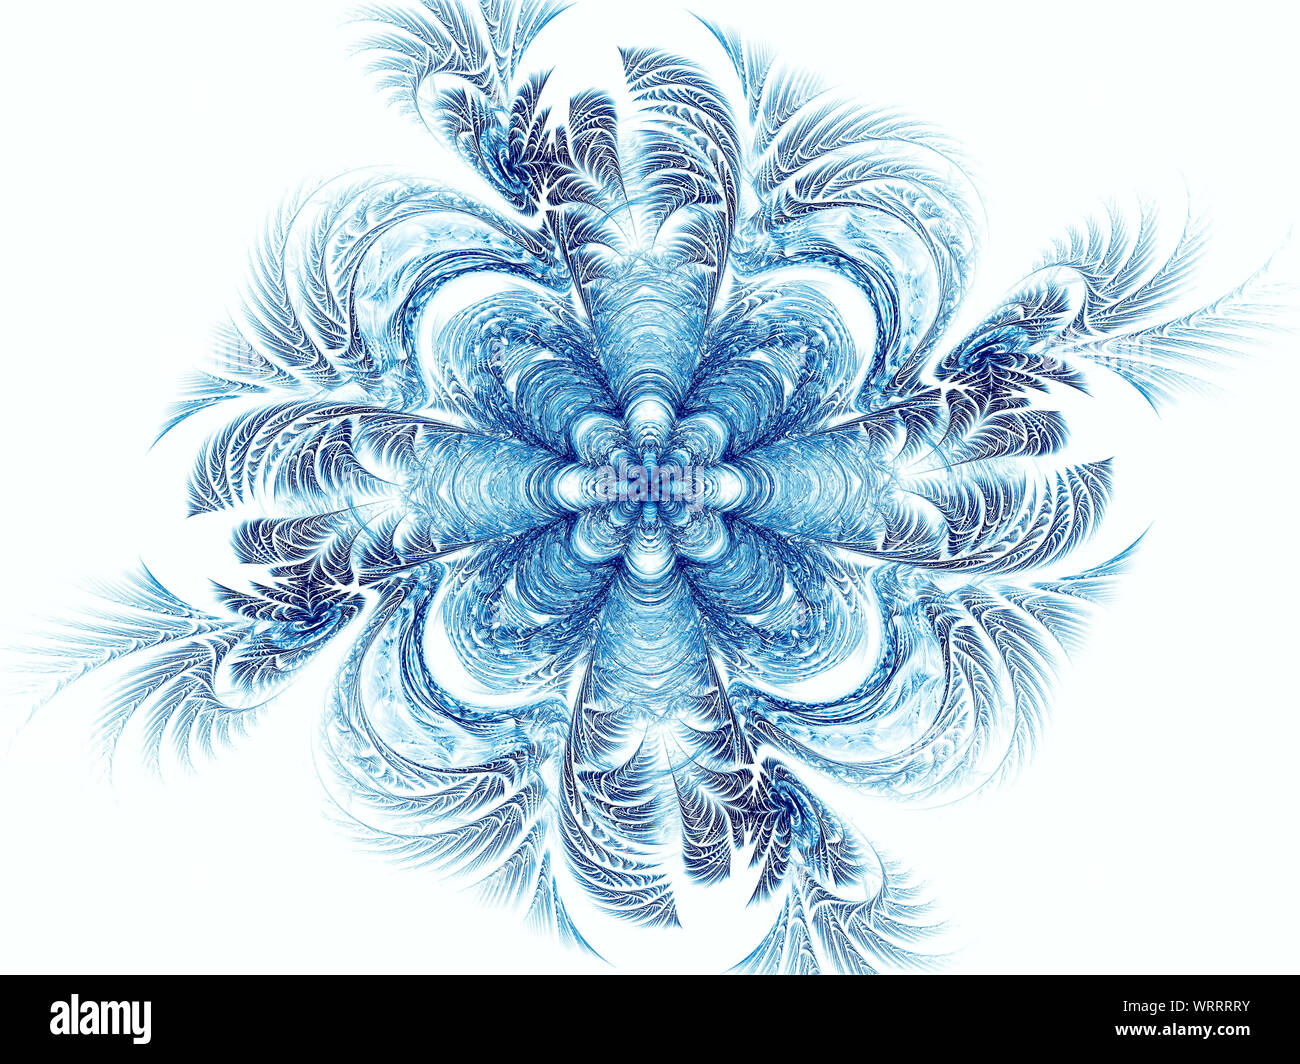 Abstrakte Mandala oder Blume - digital erzeugten Bild Stockfoto